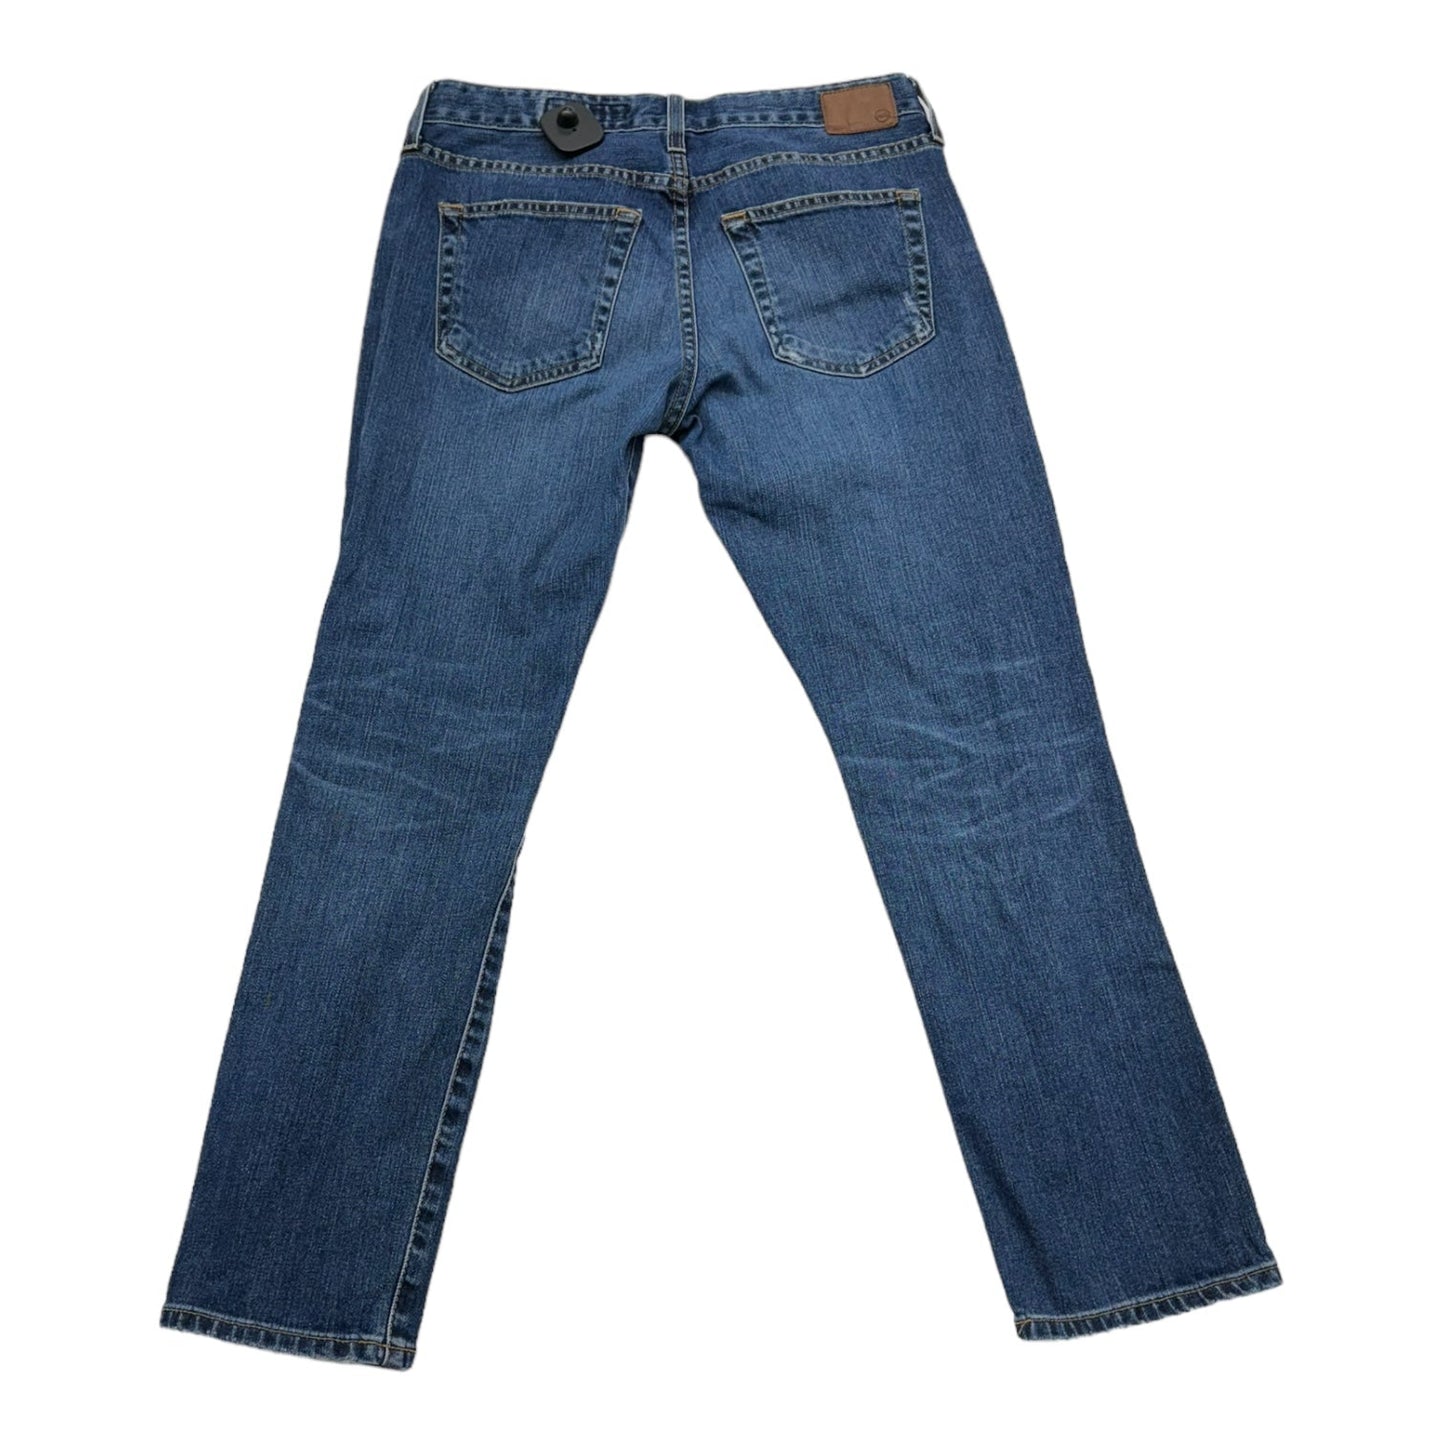 Jeans Boyfriend By Adriano Goldschmied  Size: 4